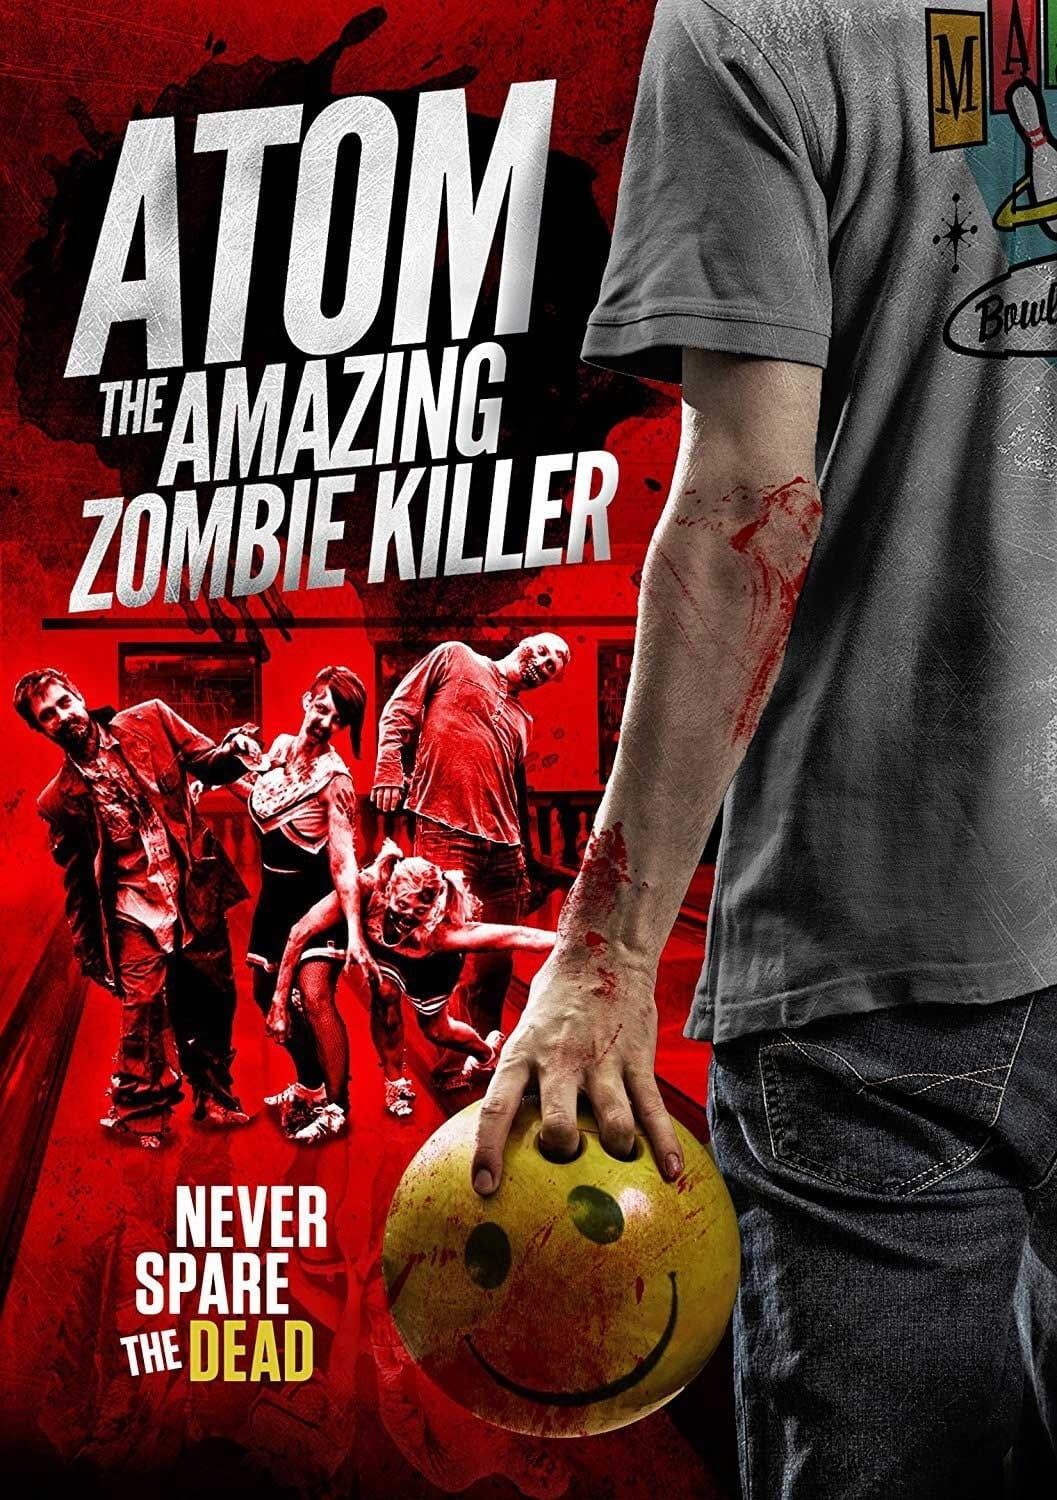 Atom the Amazing Zombie Killer poster